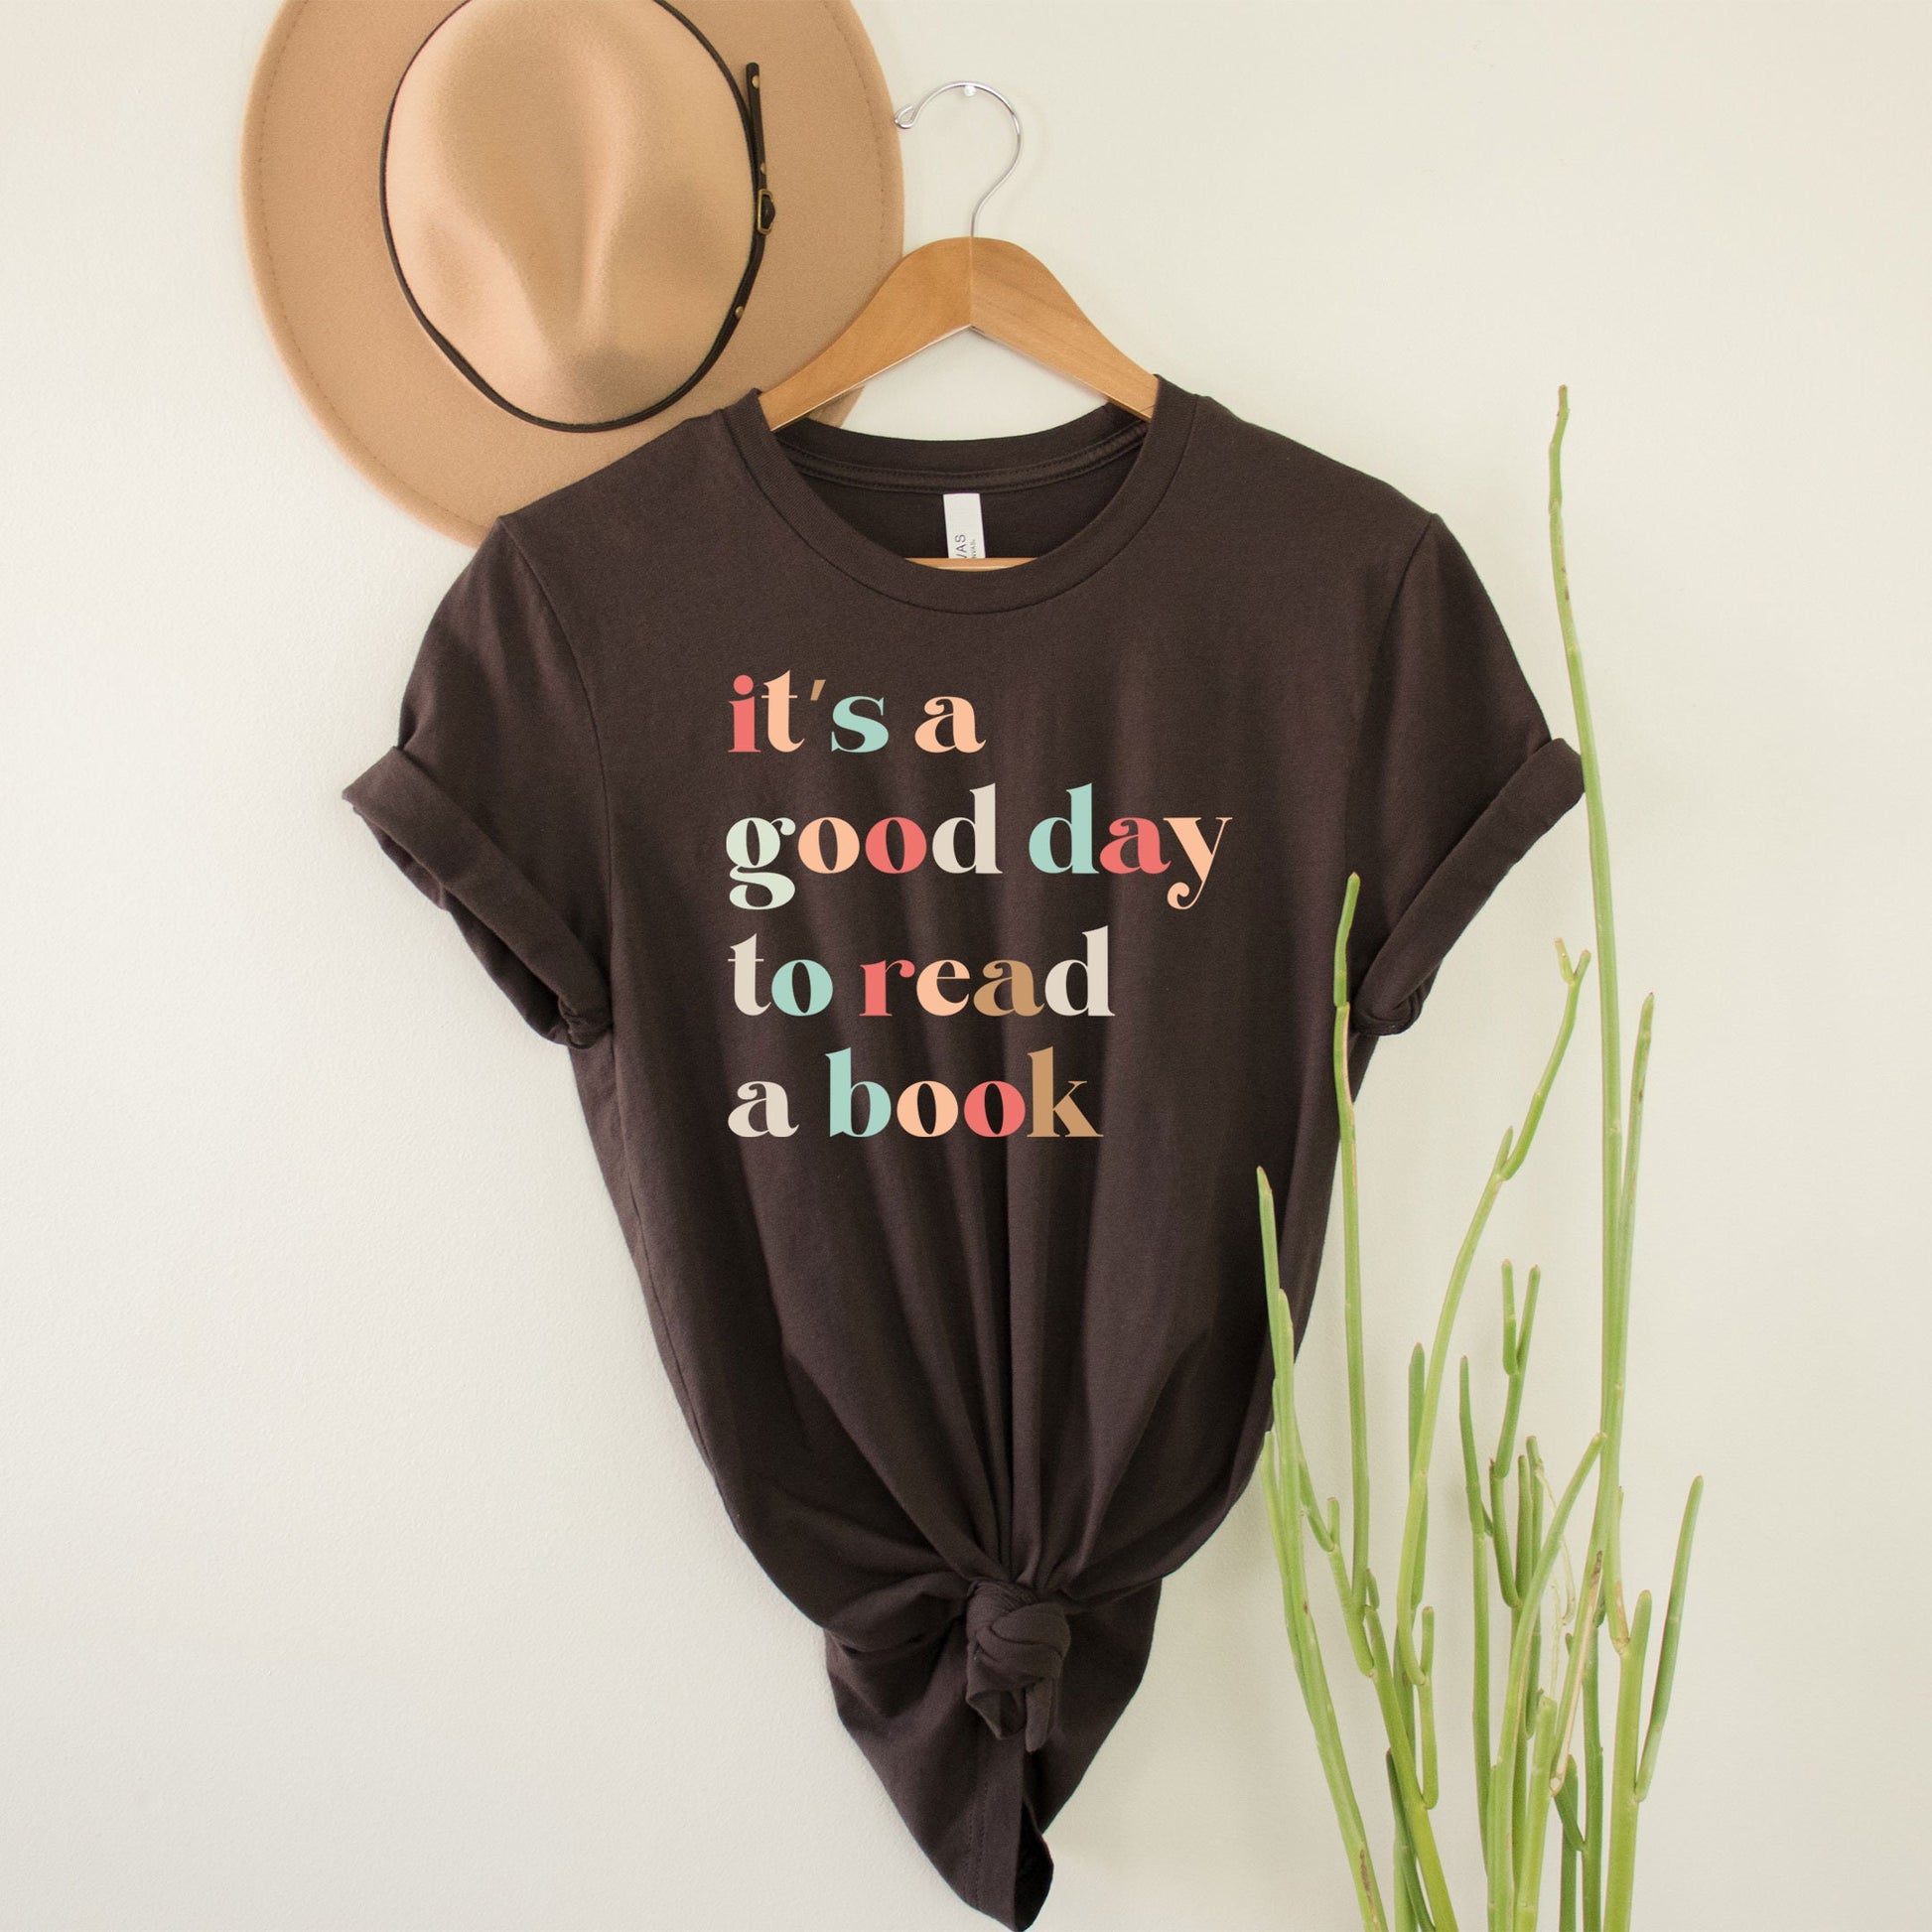 It's A Good Day To Read A Book Shirt, Bookish Shirt Teach Love Inspire Everyday, Bookworm Shirt, Teacher Shirts, Book Readers Club Group Tee